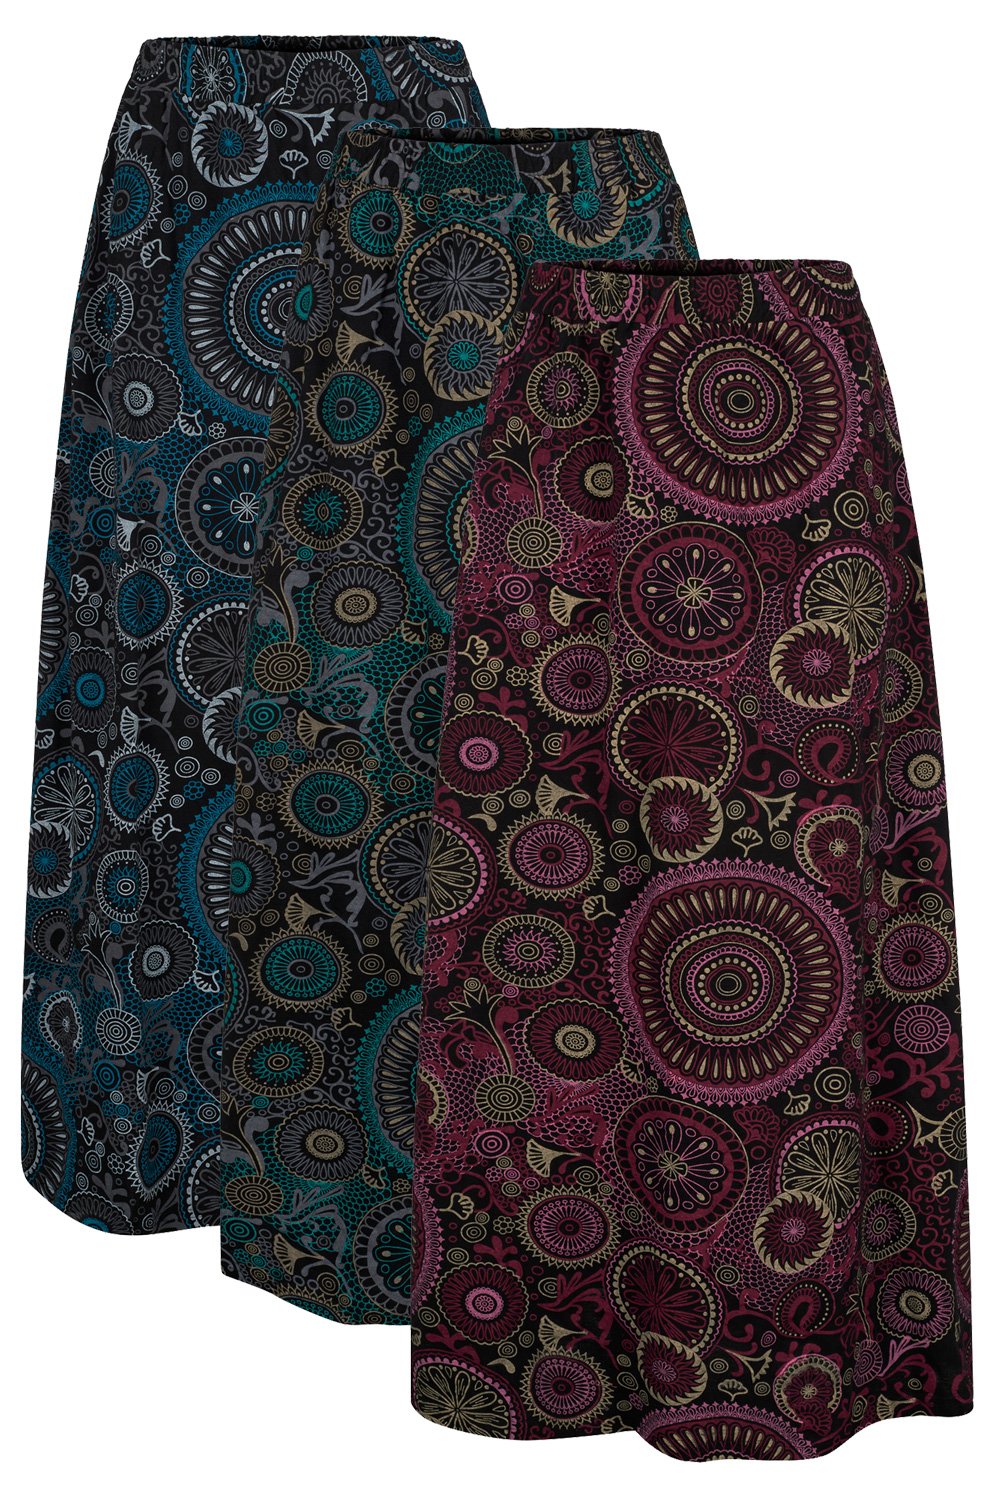 Mandala maxi skirt with pockets